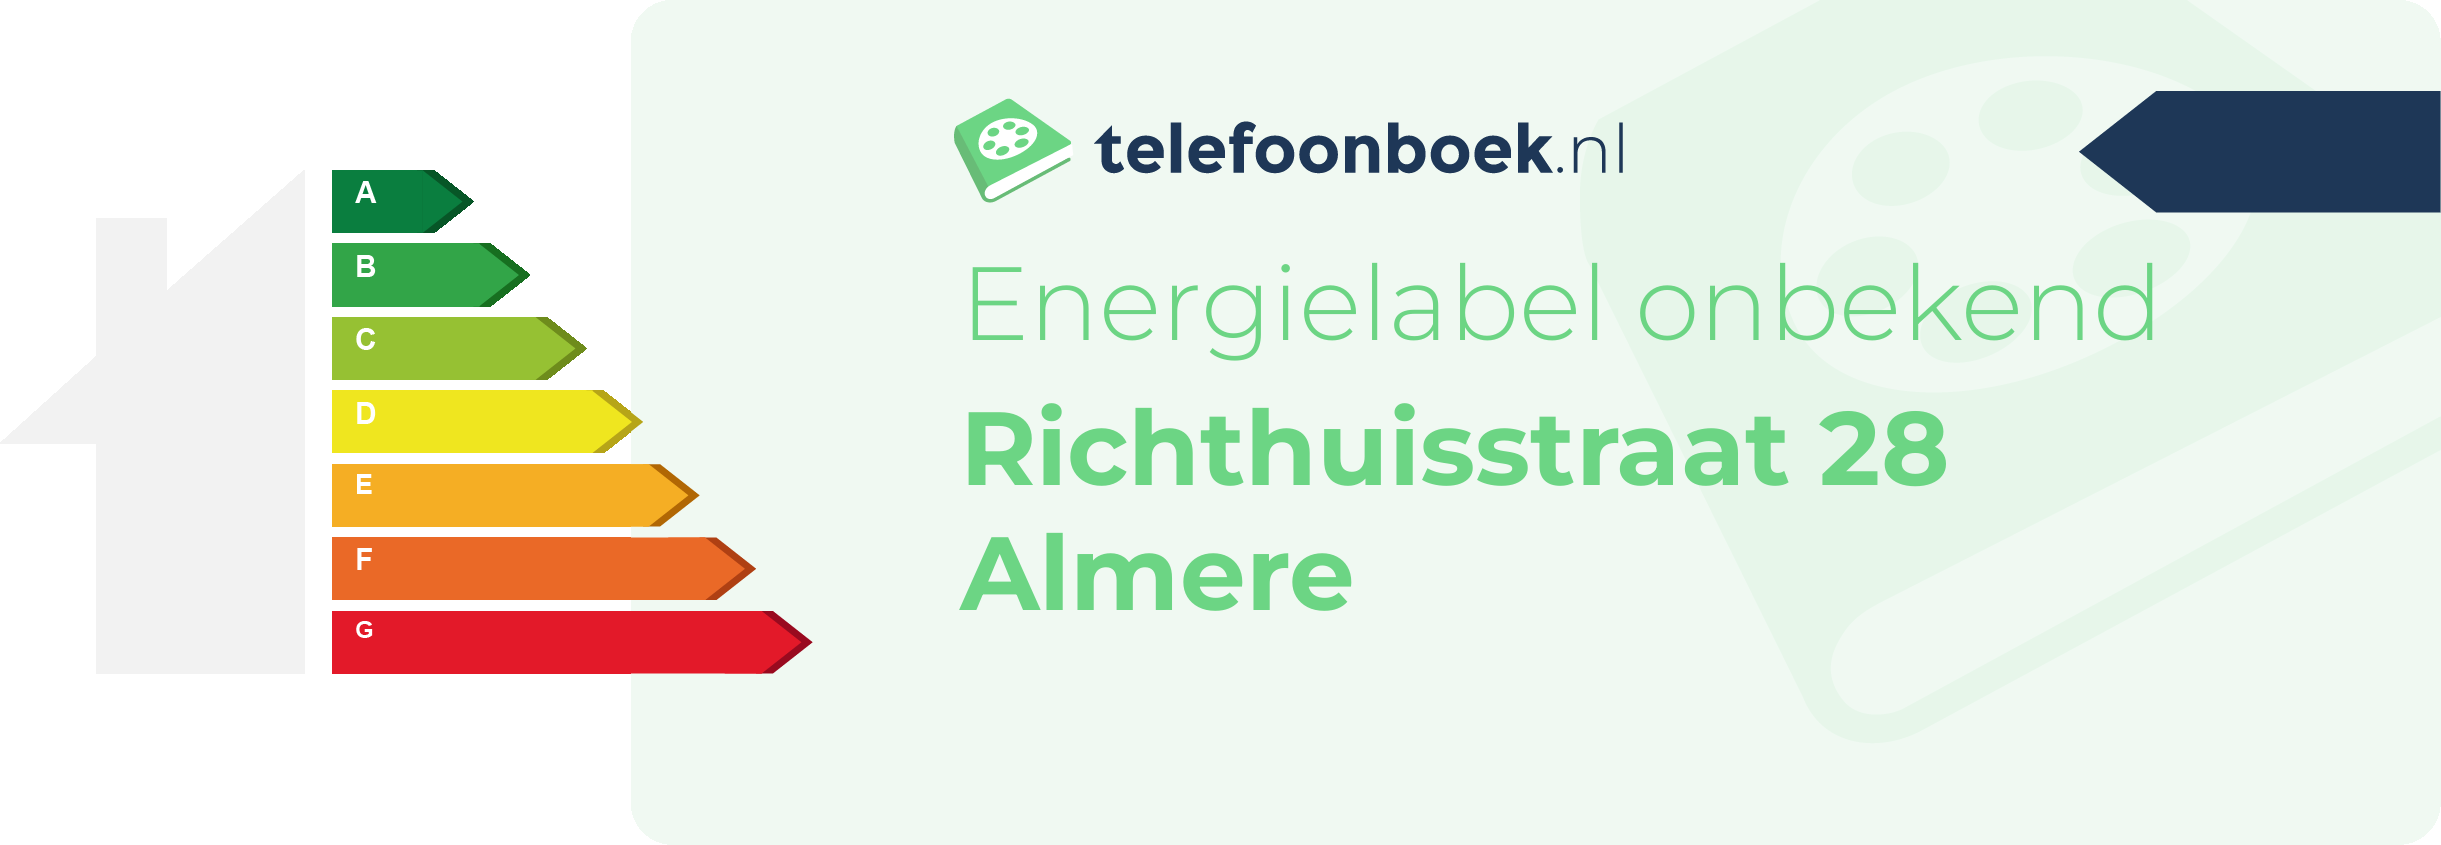 Energielabel Richthuisstraat 28 Almere